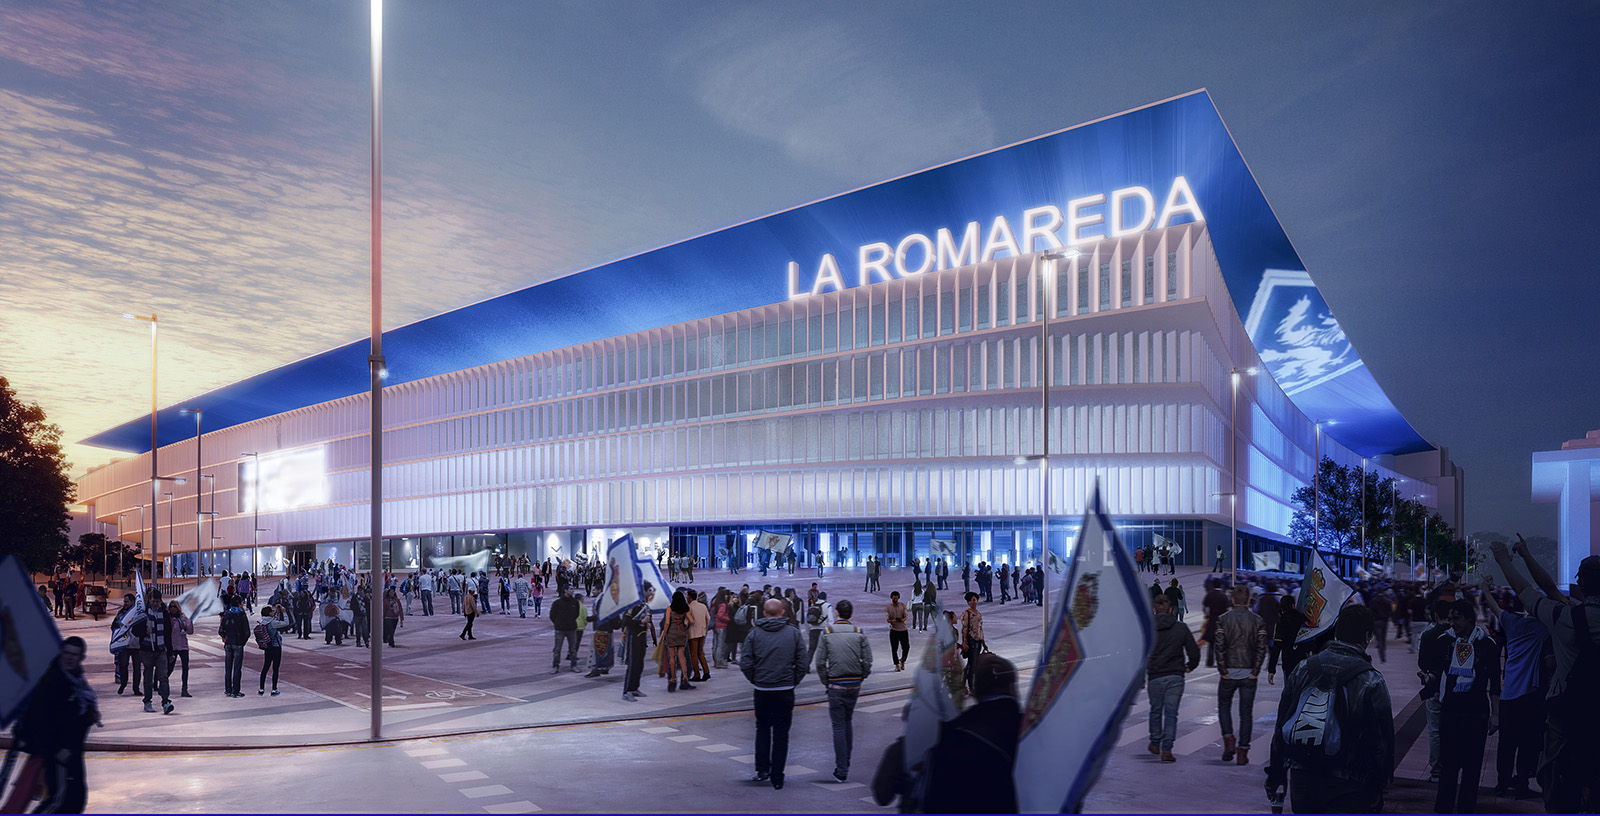 New Romareda Stadium_Pedestrian_1_copyright IDOM